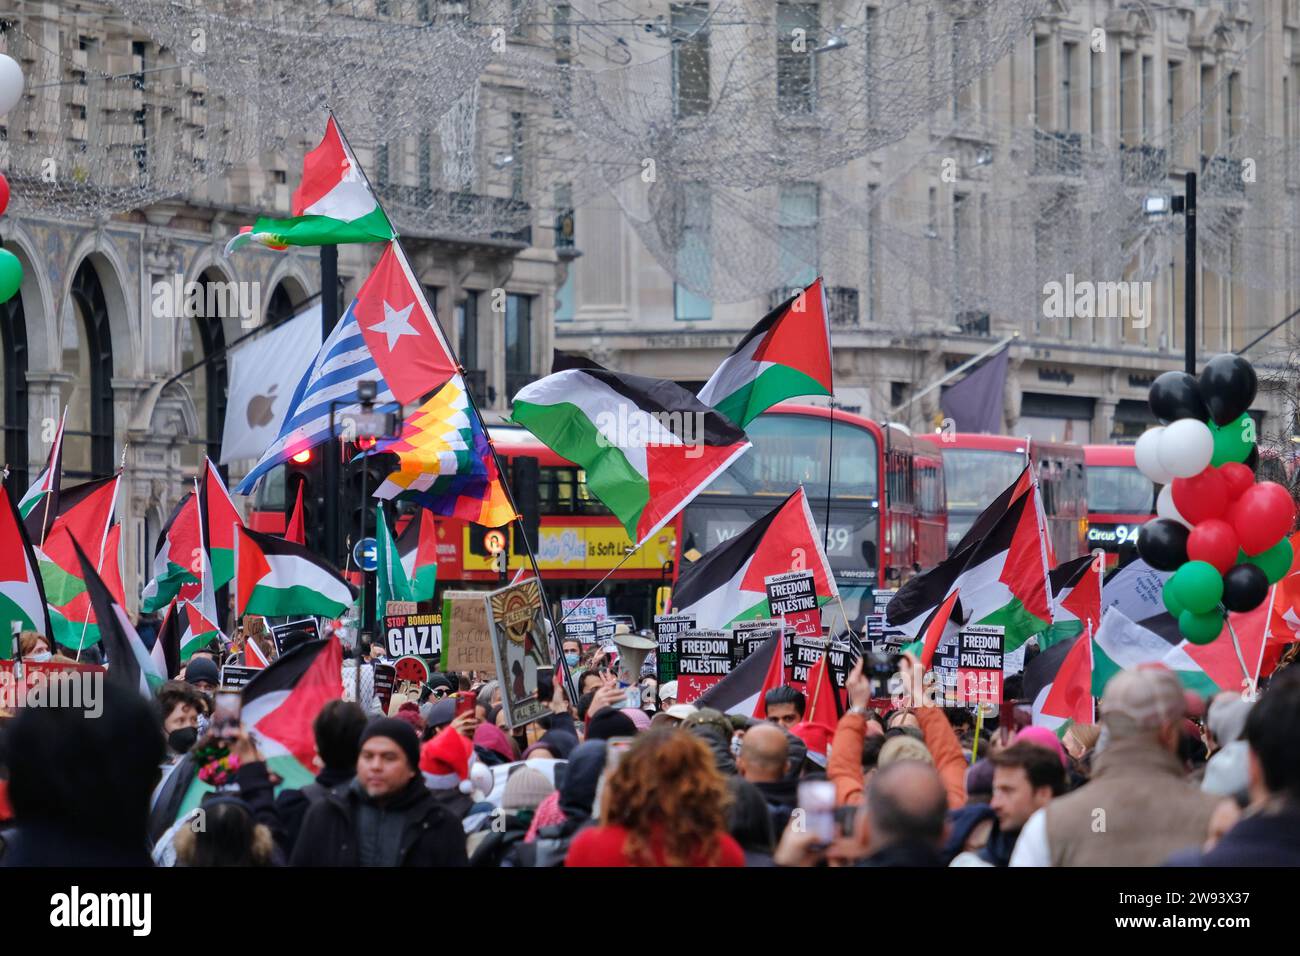 Paris court fines pro-Palestinian group for SodaStream boycott